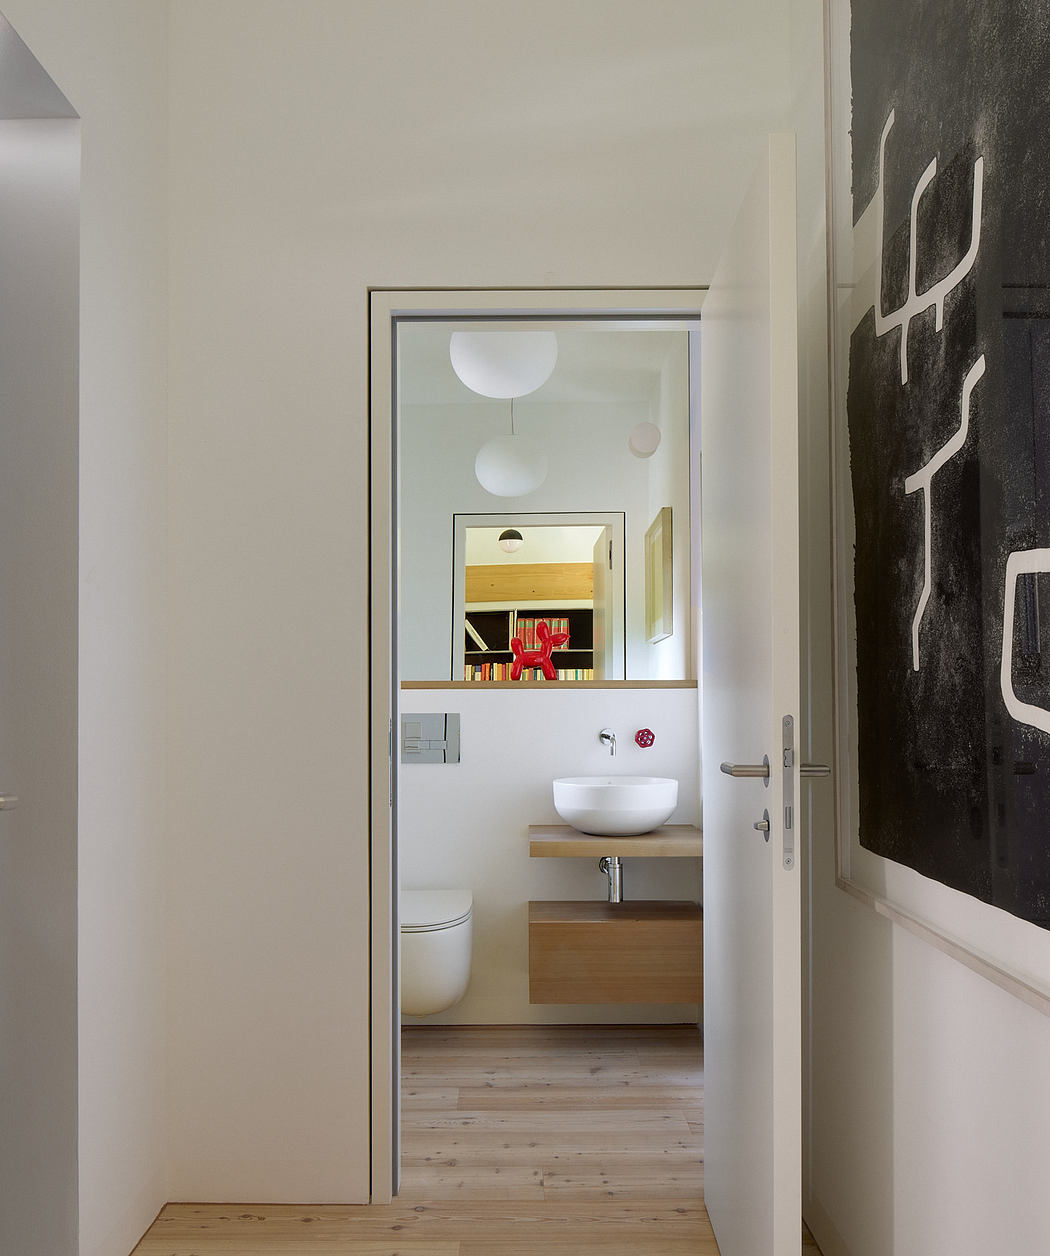 Modern bathroom viewed through an open door with minimalist decor.